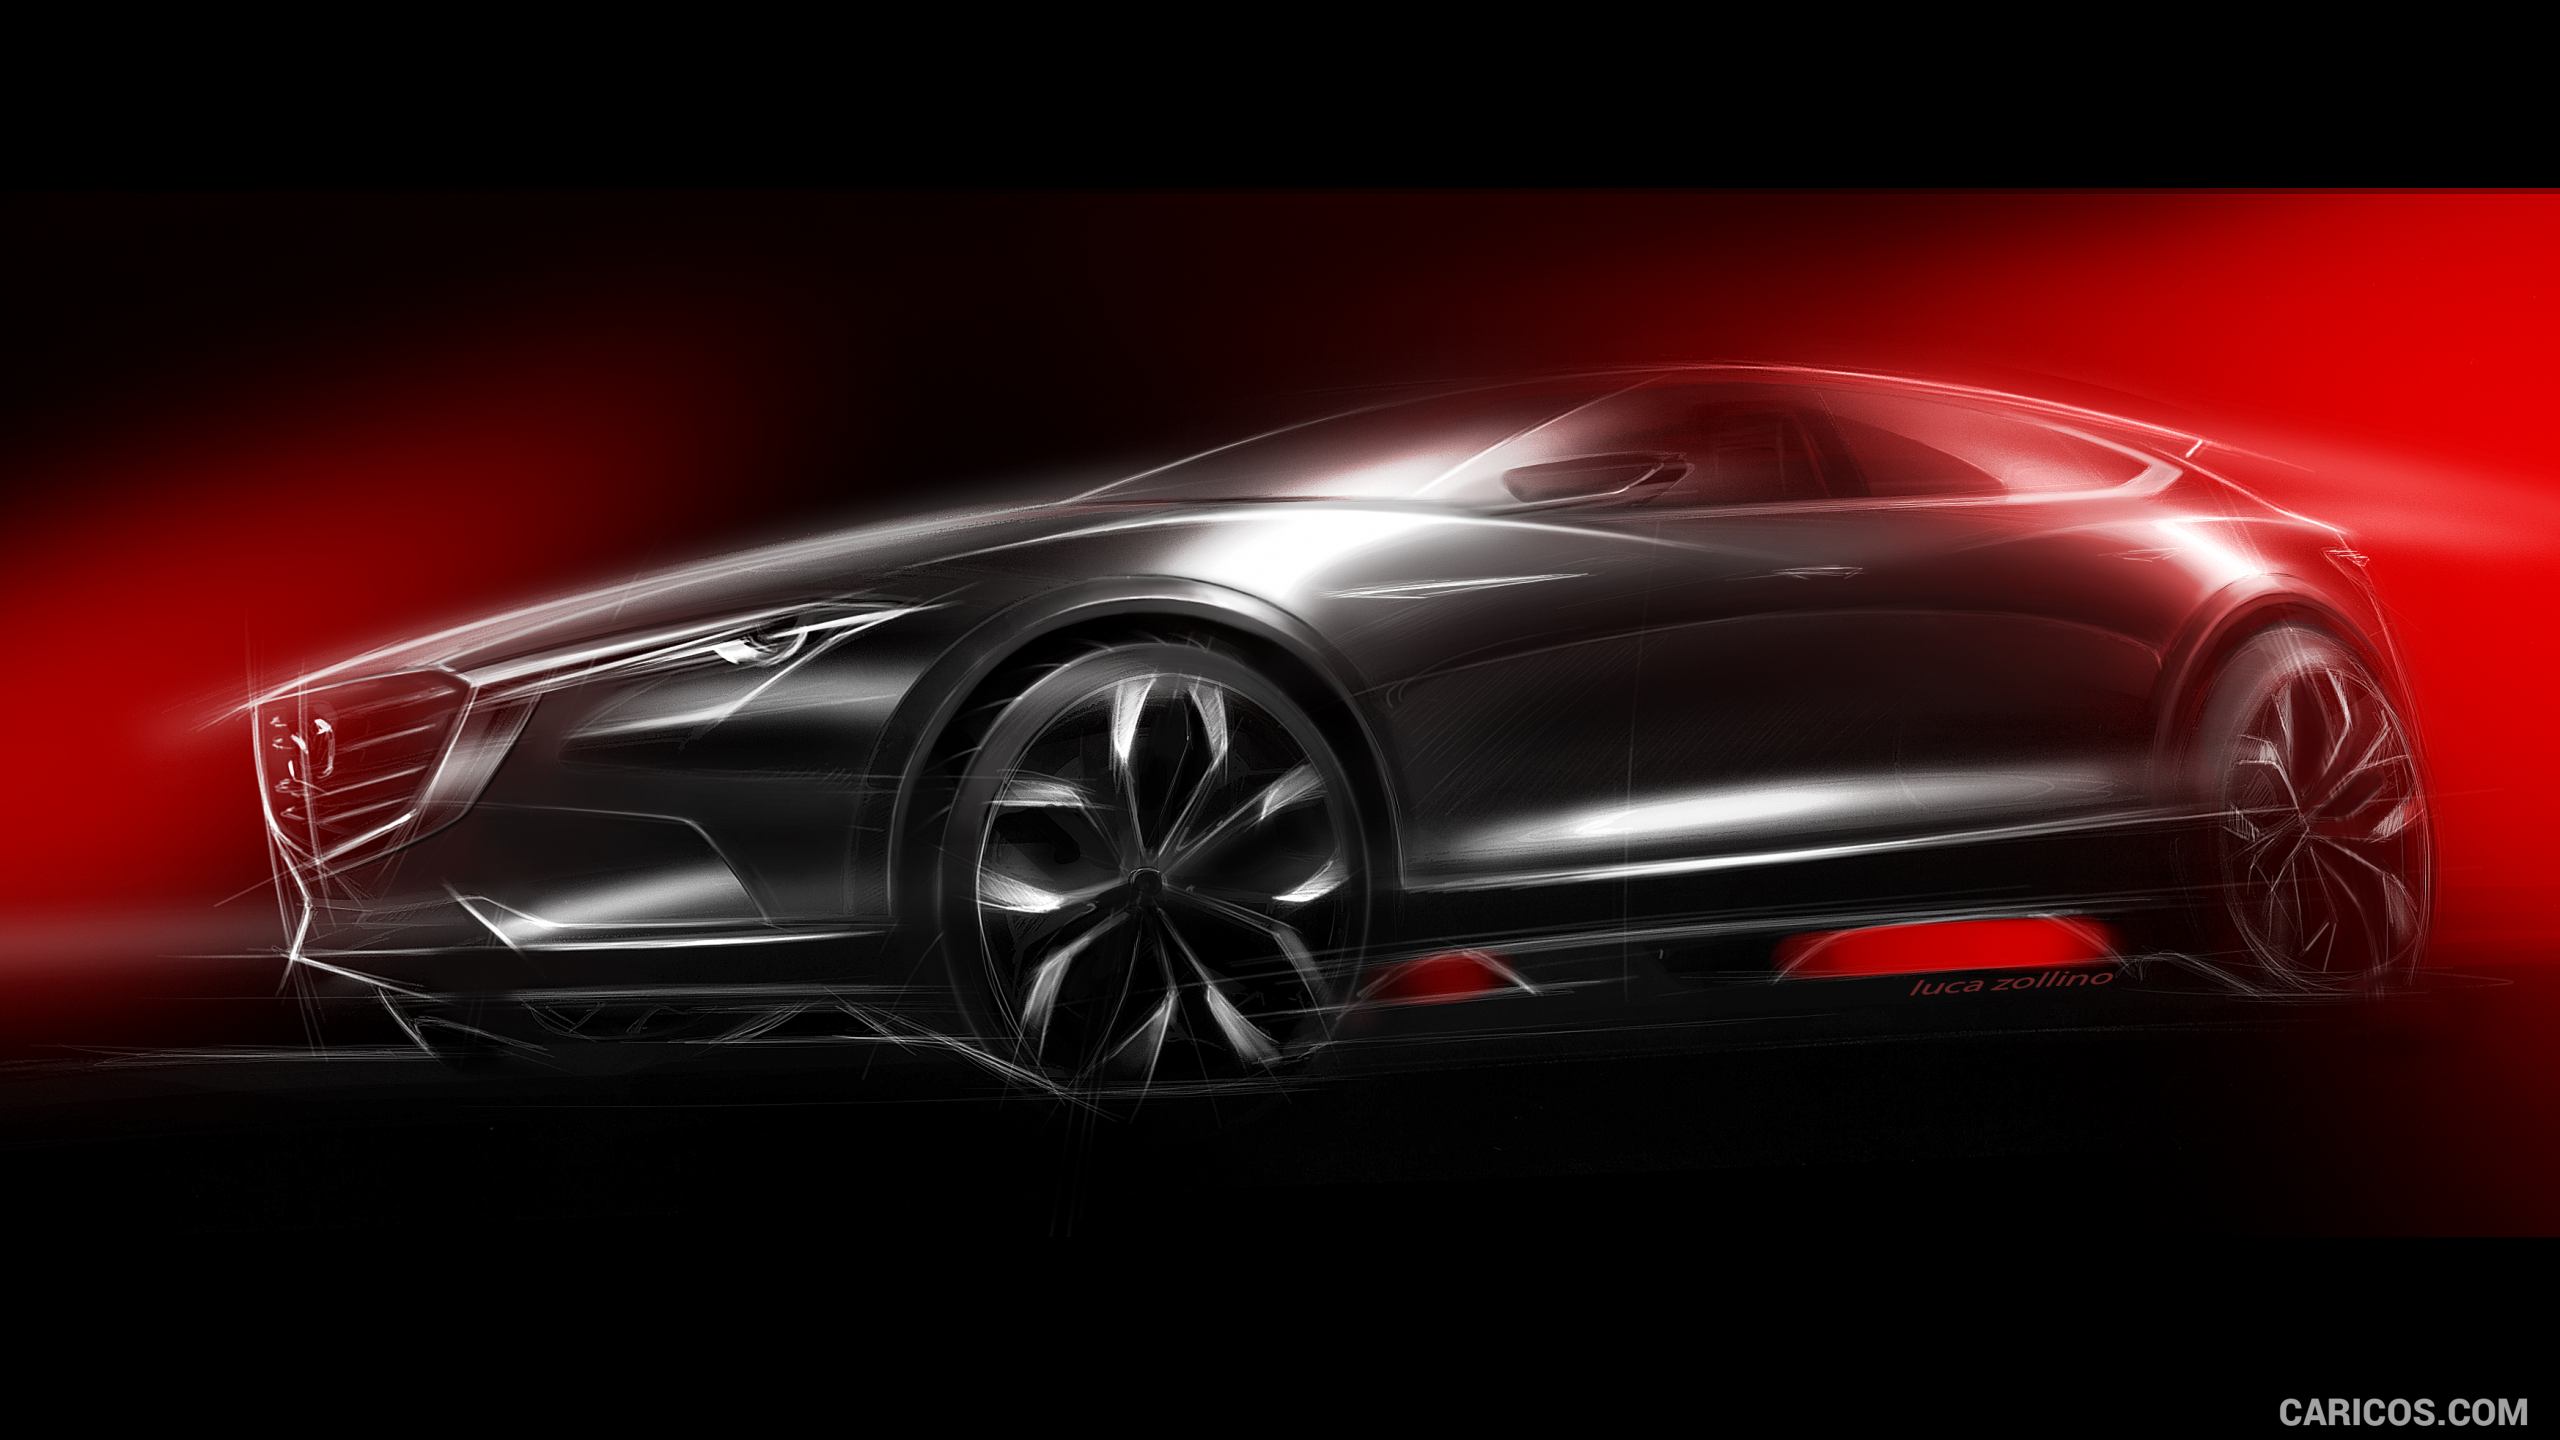 2015 Mazda Koeru Crossover Concept - Design Sketch, #17 of 17